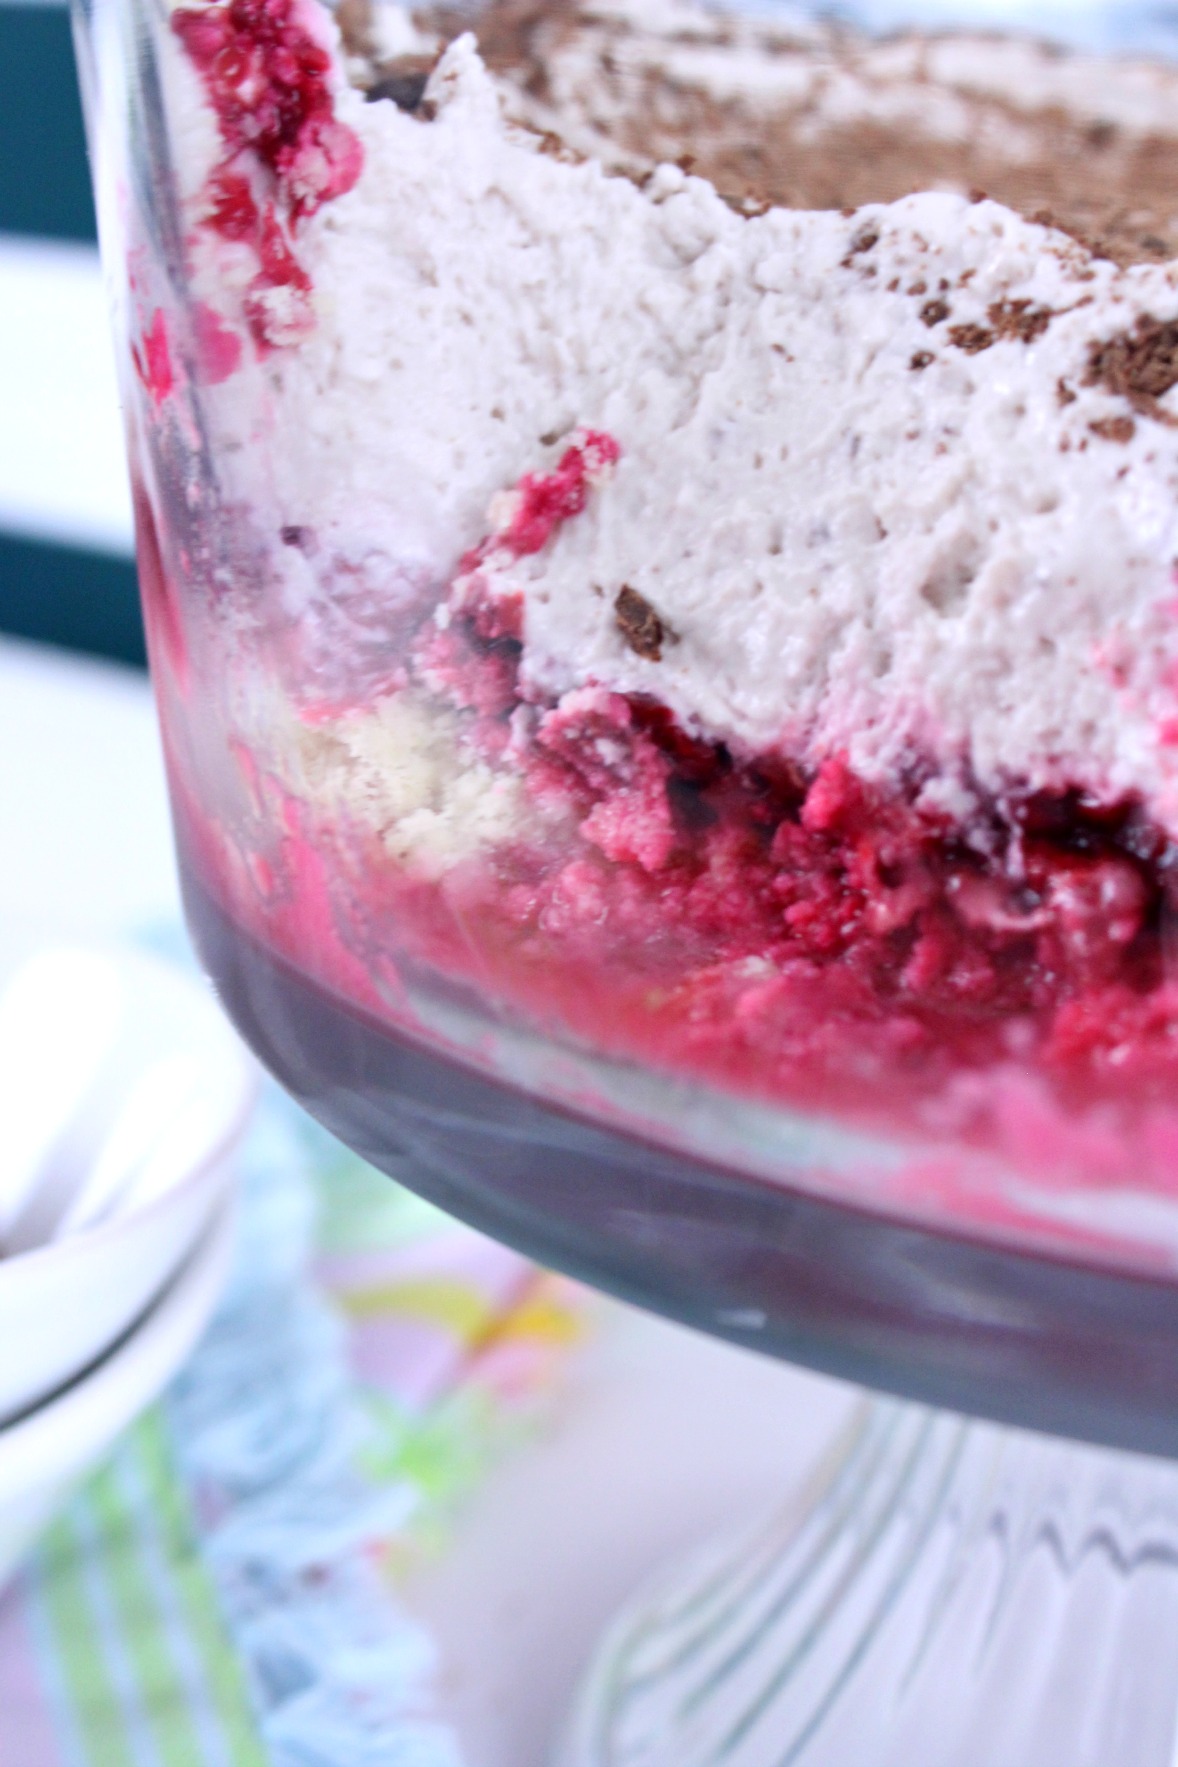 Raspberry-Mascarpone Trifle with Amaretti Cookies